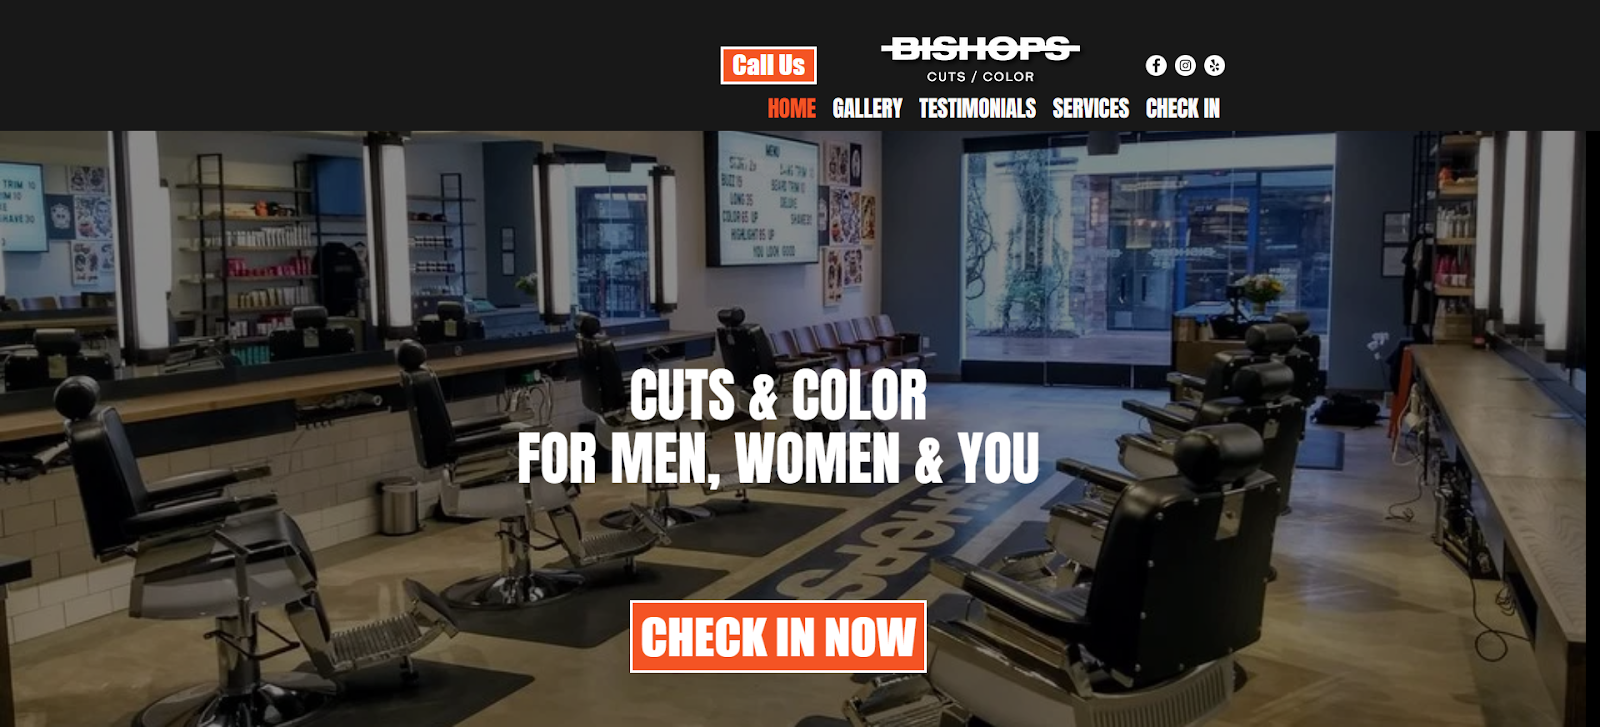 hair salon website, bishop cuts/color